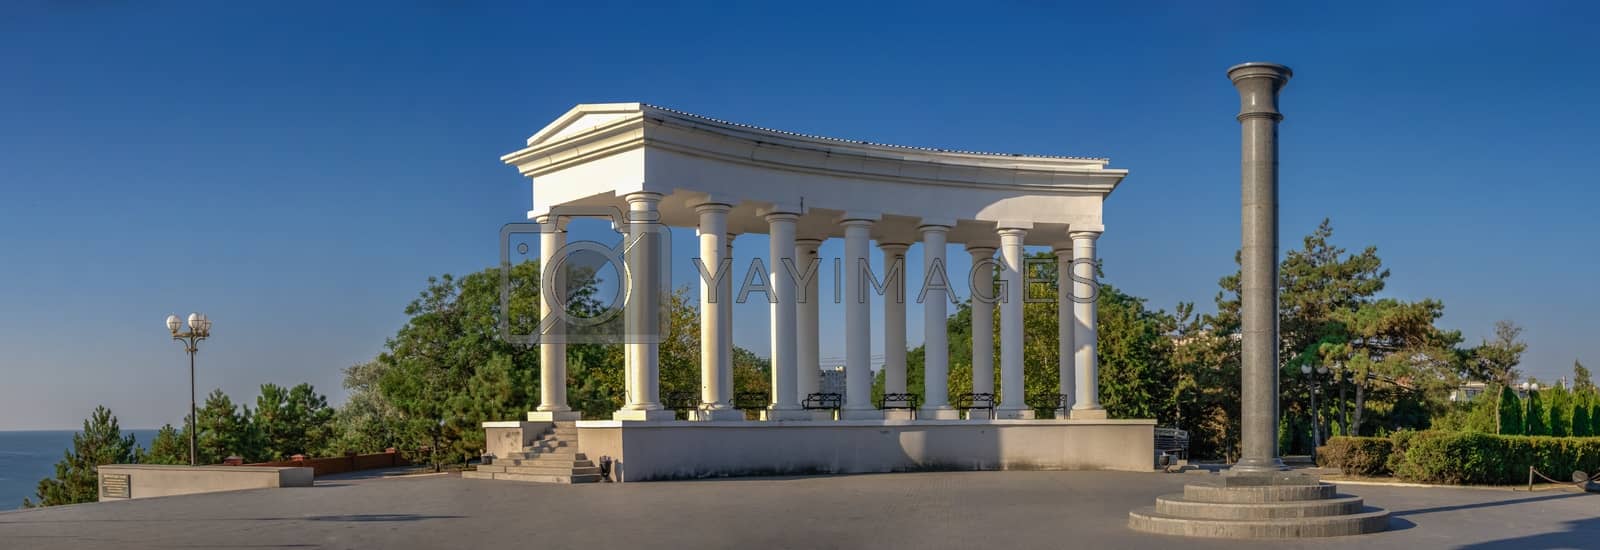 Royalty free image of Colonnade in Chernomorsk, Ukraine by Multipedia